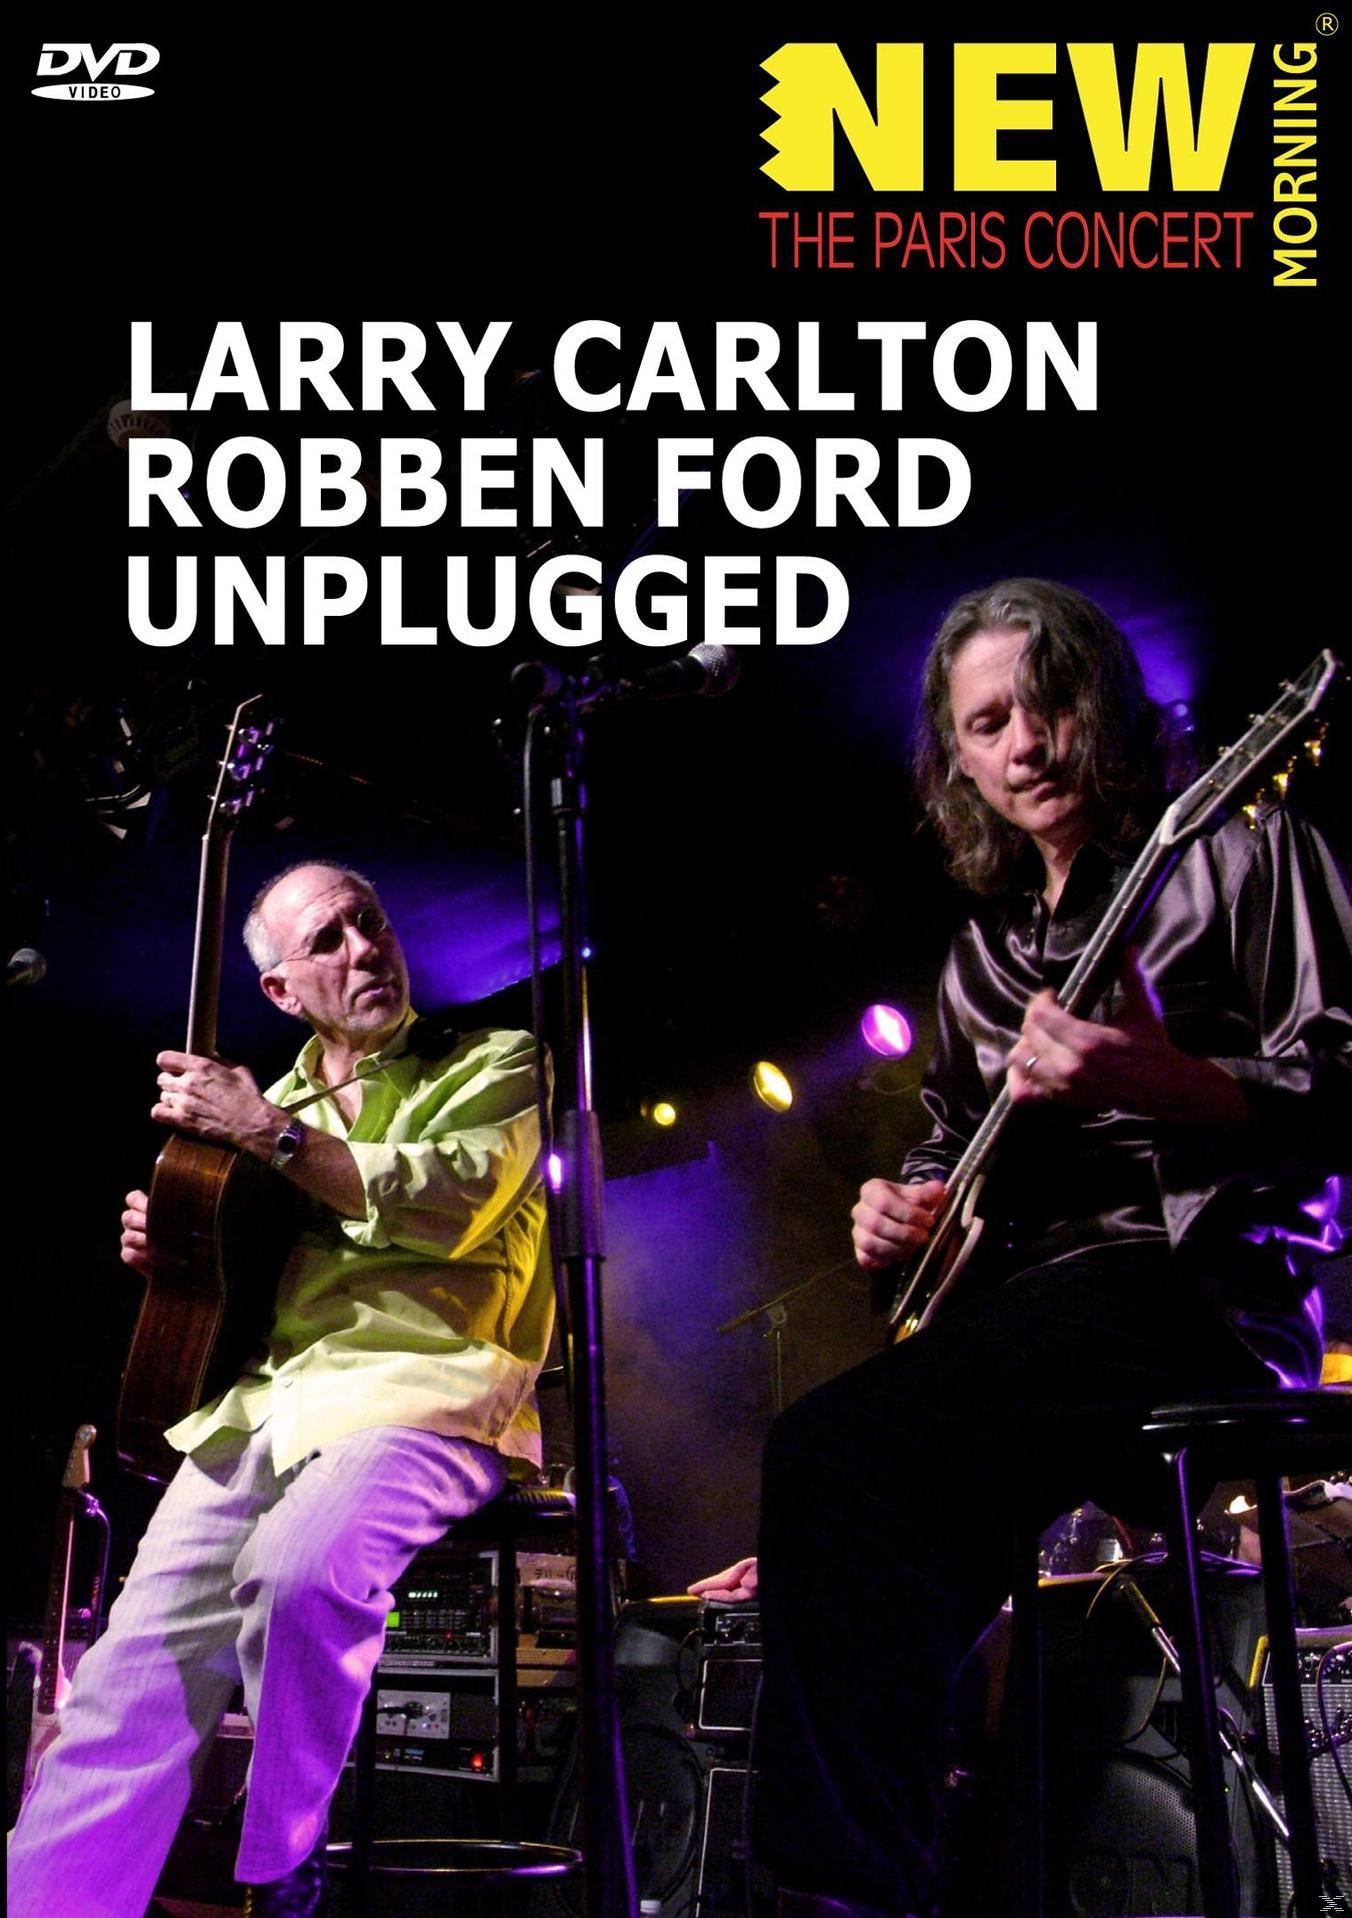 Ford Unplugged Carlton;Robben - (DVD) - Larry